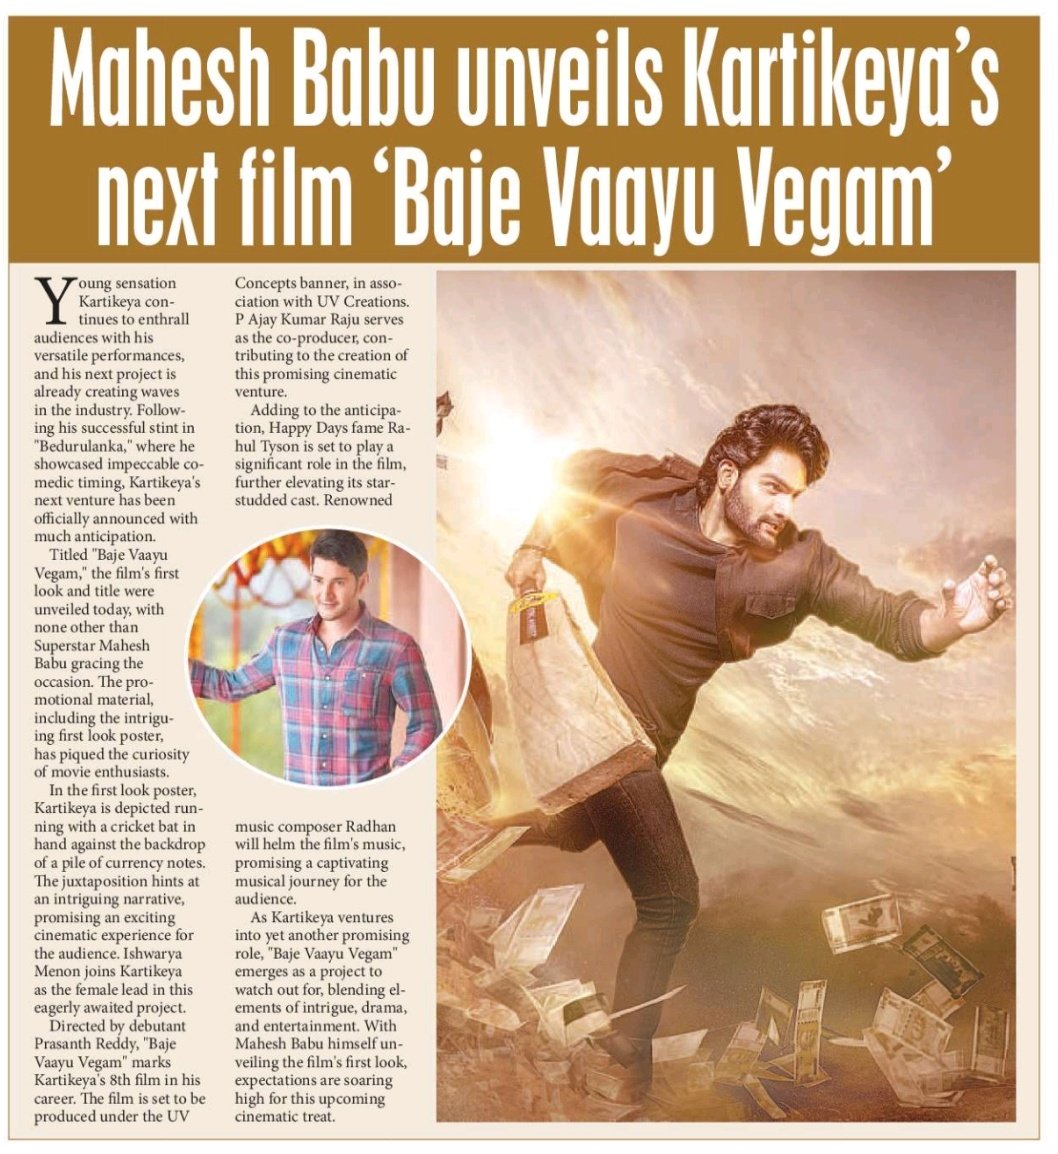 Mahesh Babu Unveils Kartikeya's Next Film 'Baje Vaayu Vegam' 🔥